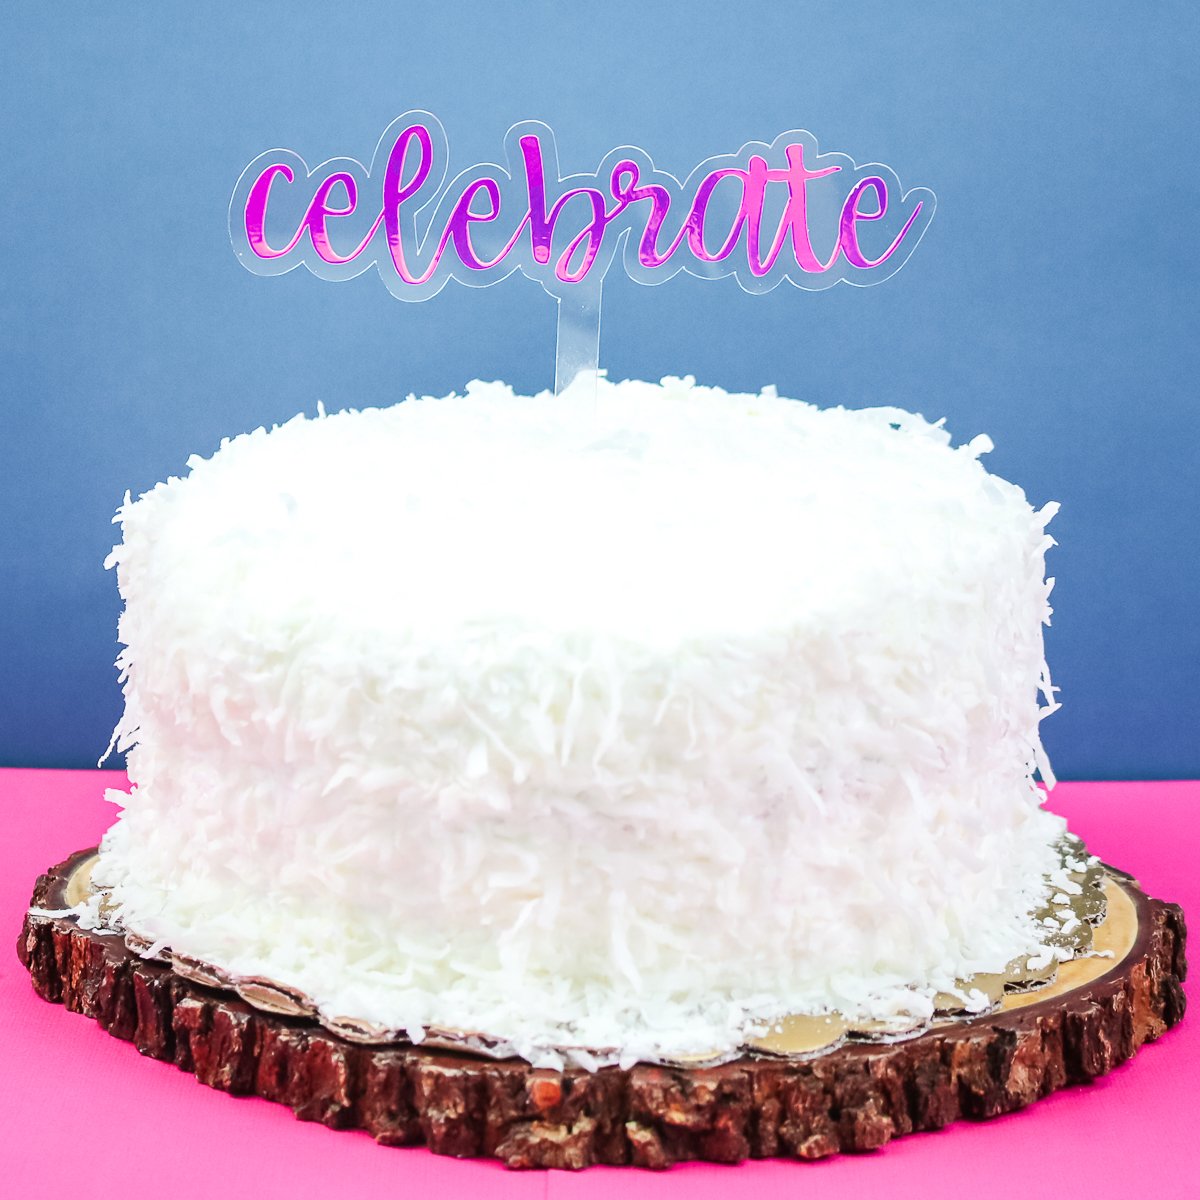 How to make cake decorations using your Cricut machine – Cricut